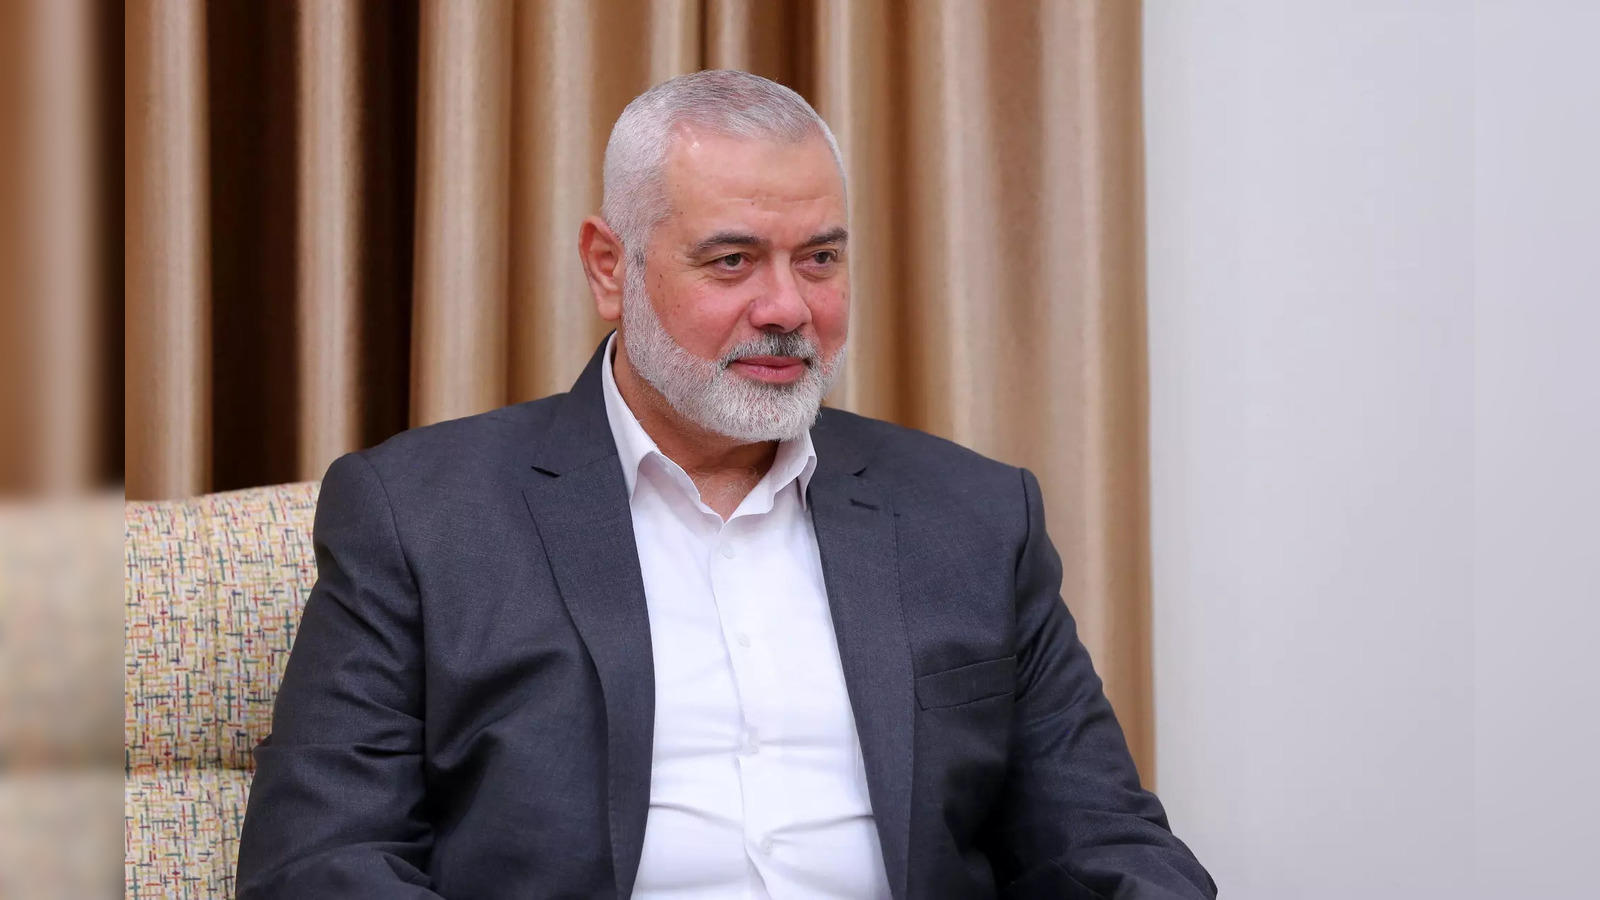 ismail haniyeh: Who is Ismail Haniyeh? Senior Hamas leader who